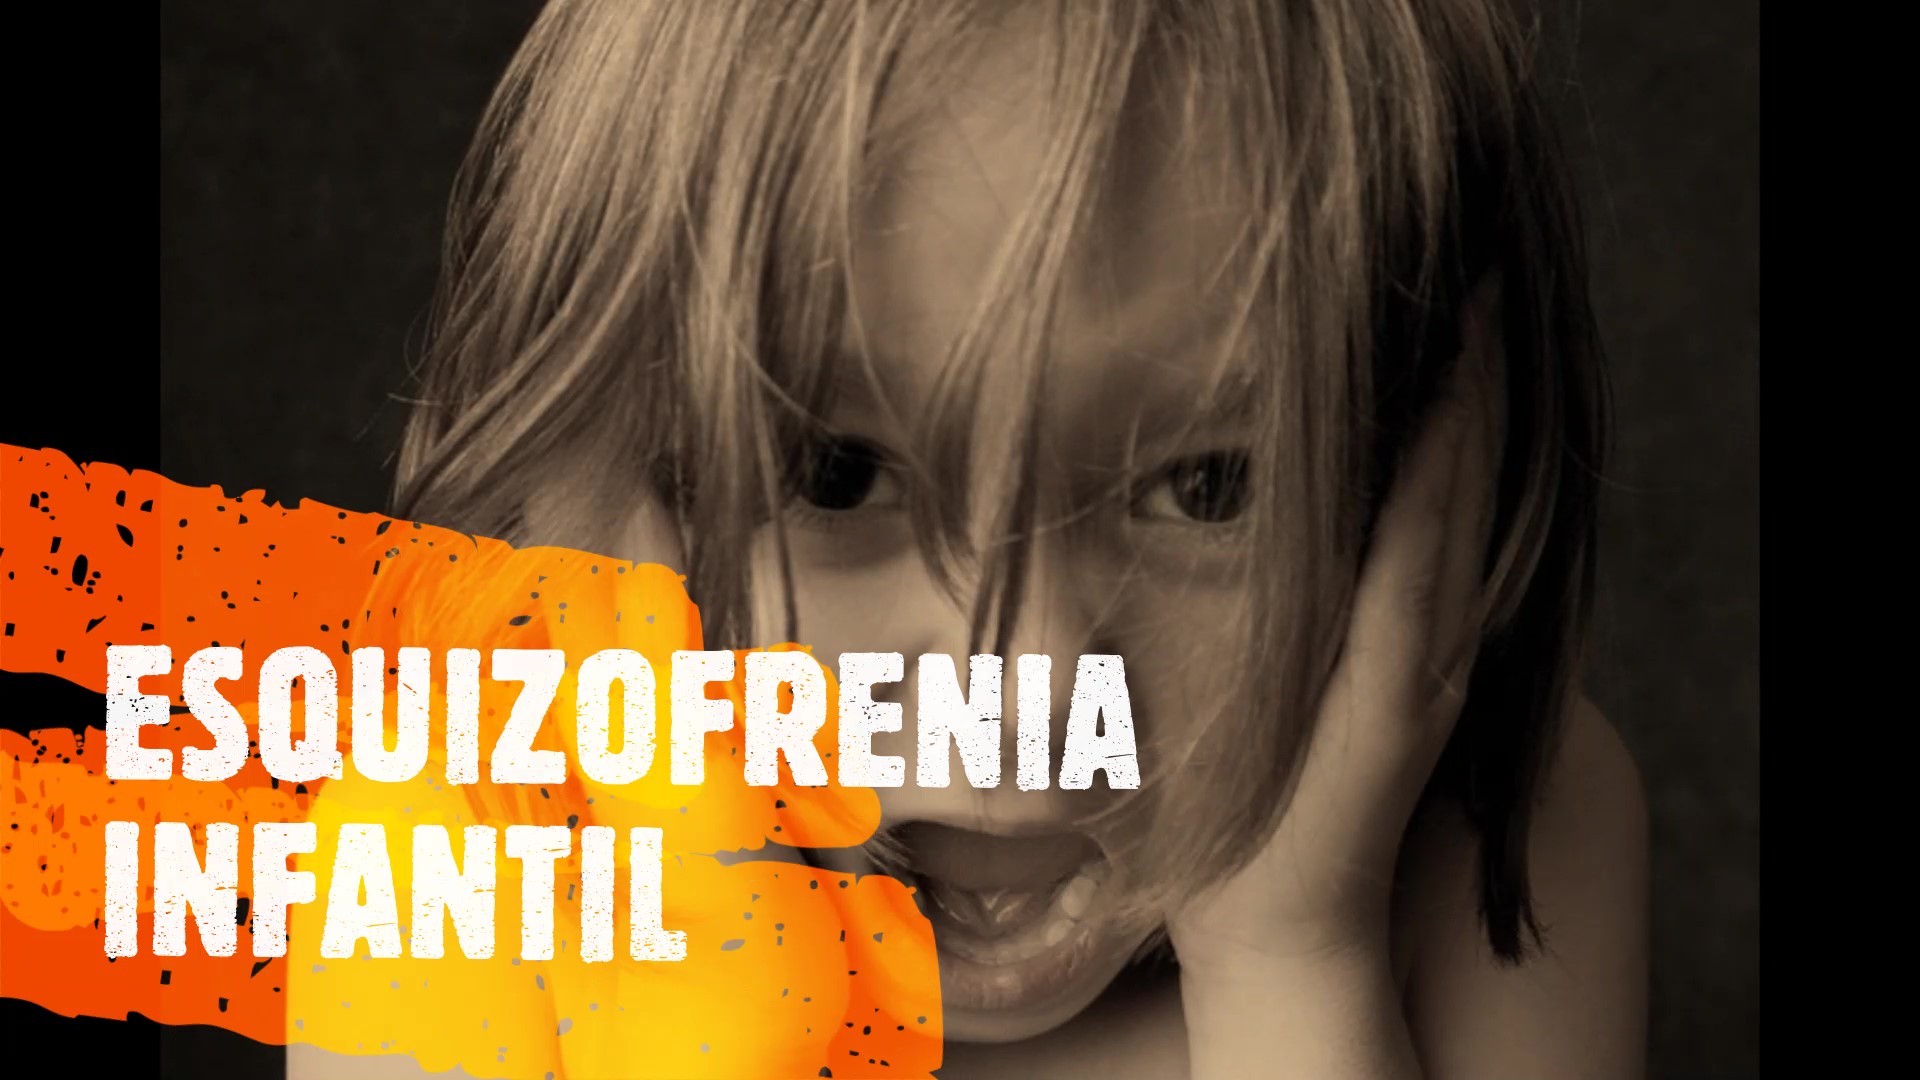 Esquizofrenia infantil. ¿Qué se sabe realmente?